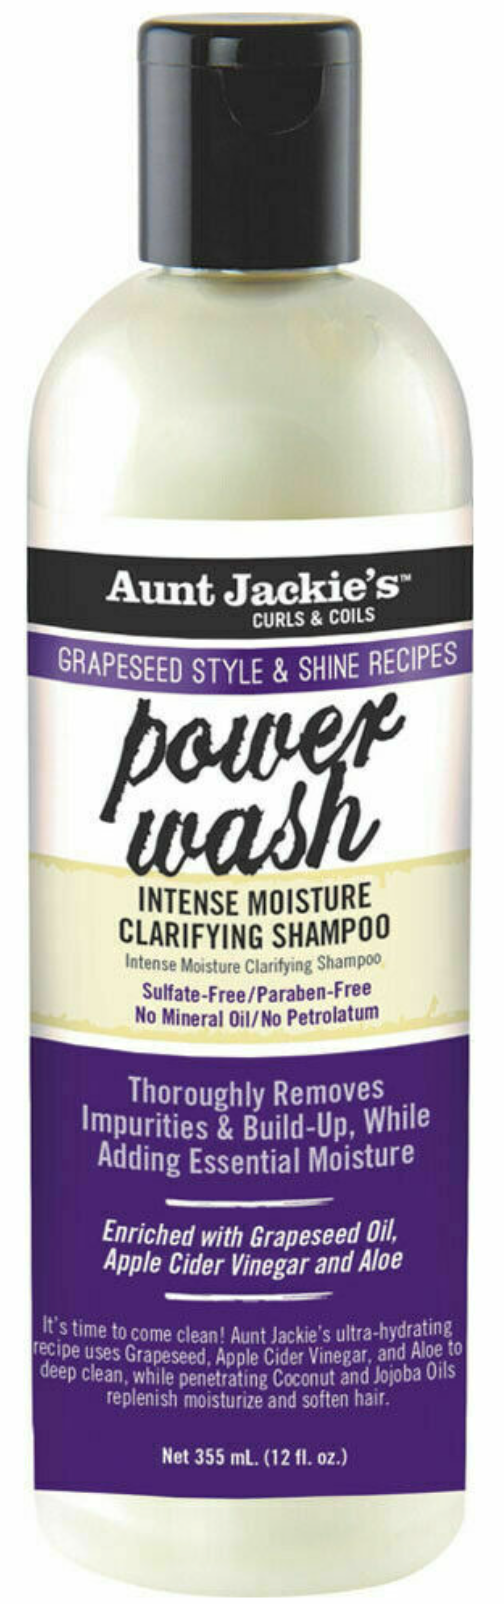 Aunt Jackie’s Power Wash Shampoo